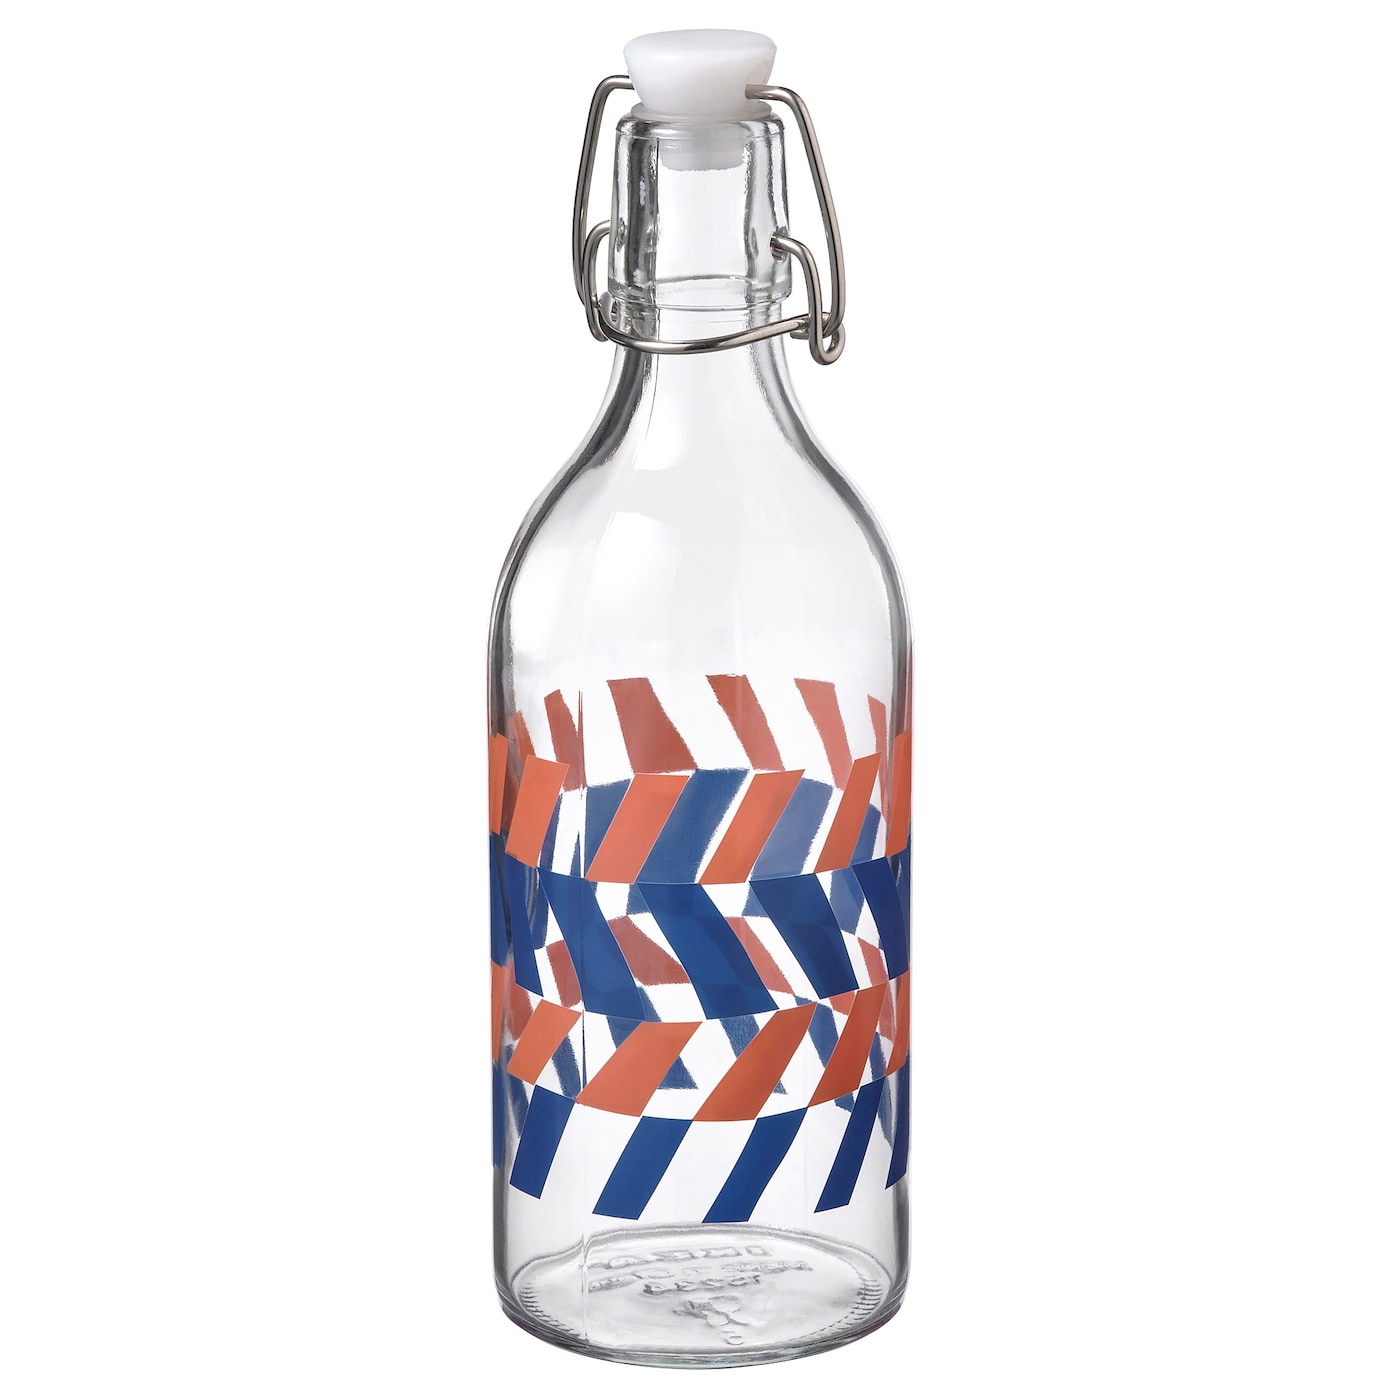 Бутылка с крышкой - IKEA KORKEN, 0.5 л, стекло/синий/оранжевый, КОРКЕН ИКЕА